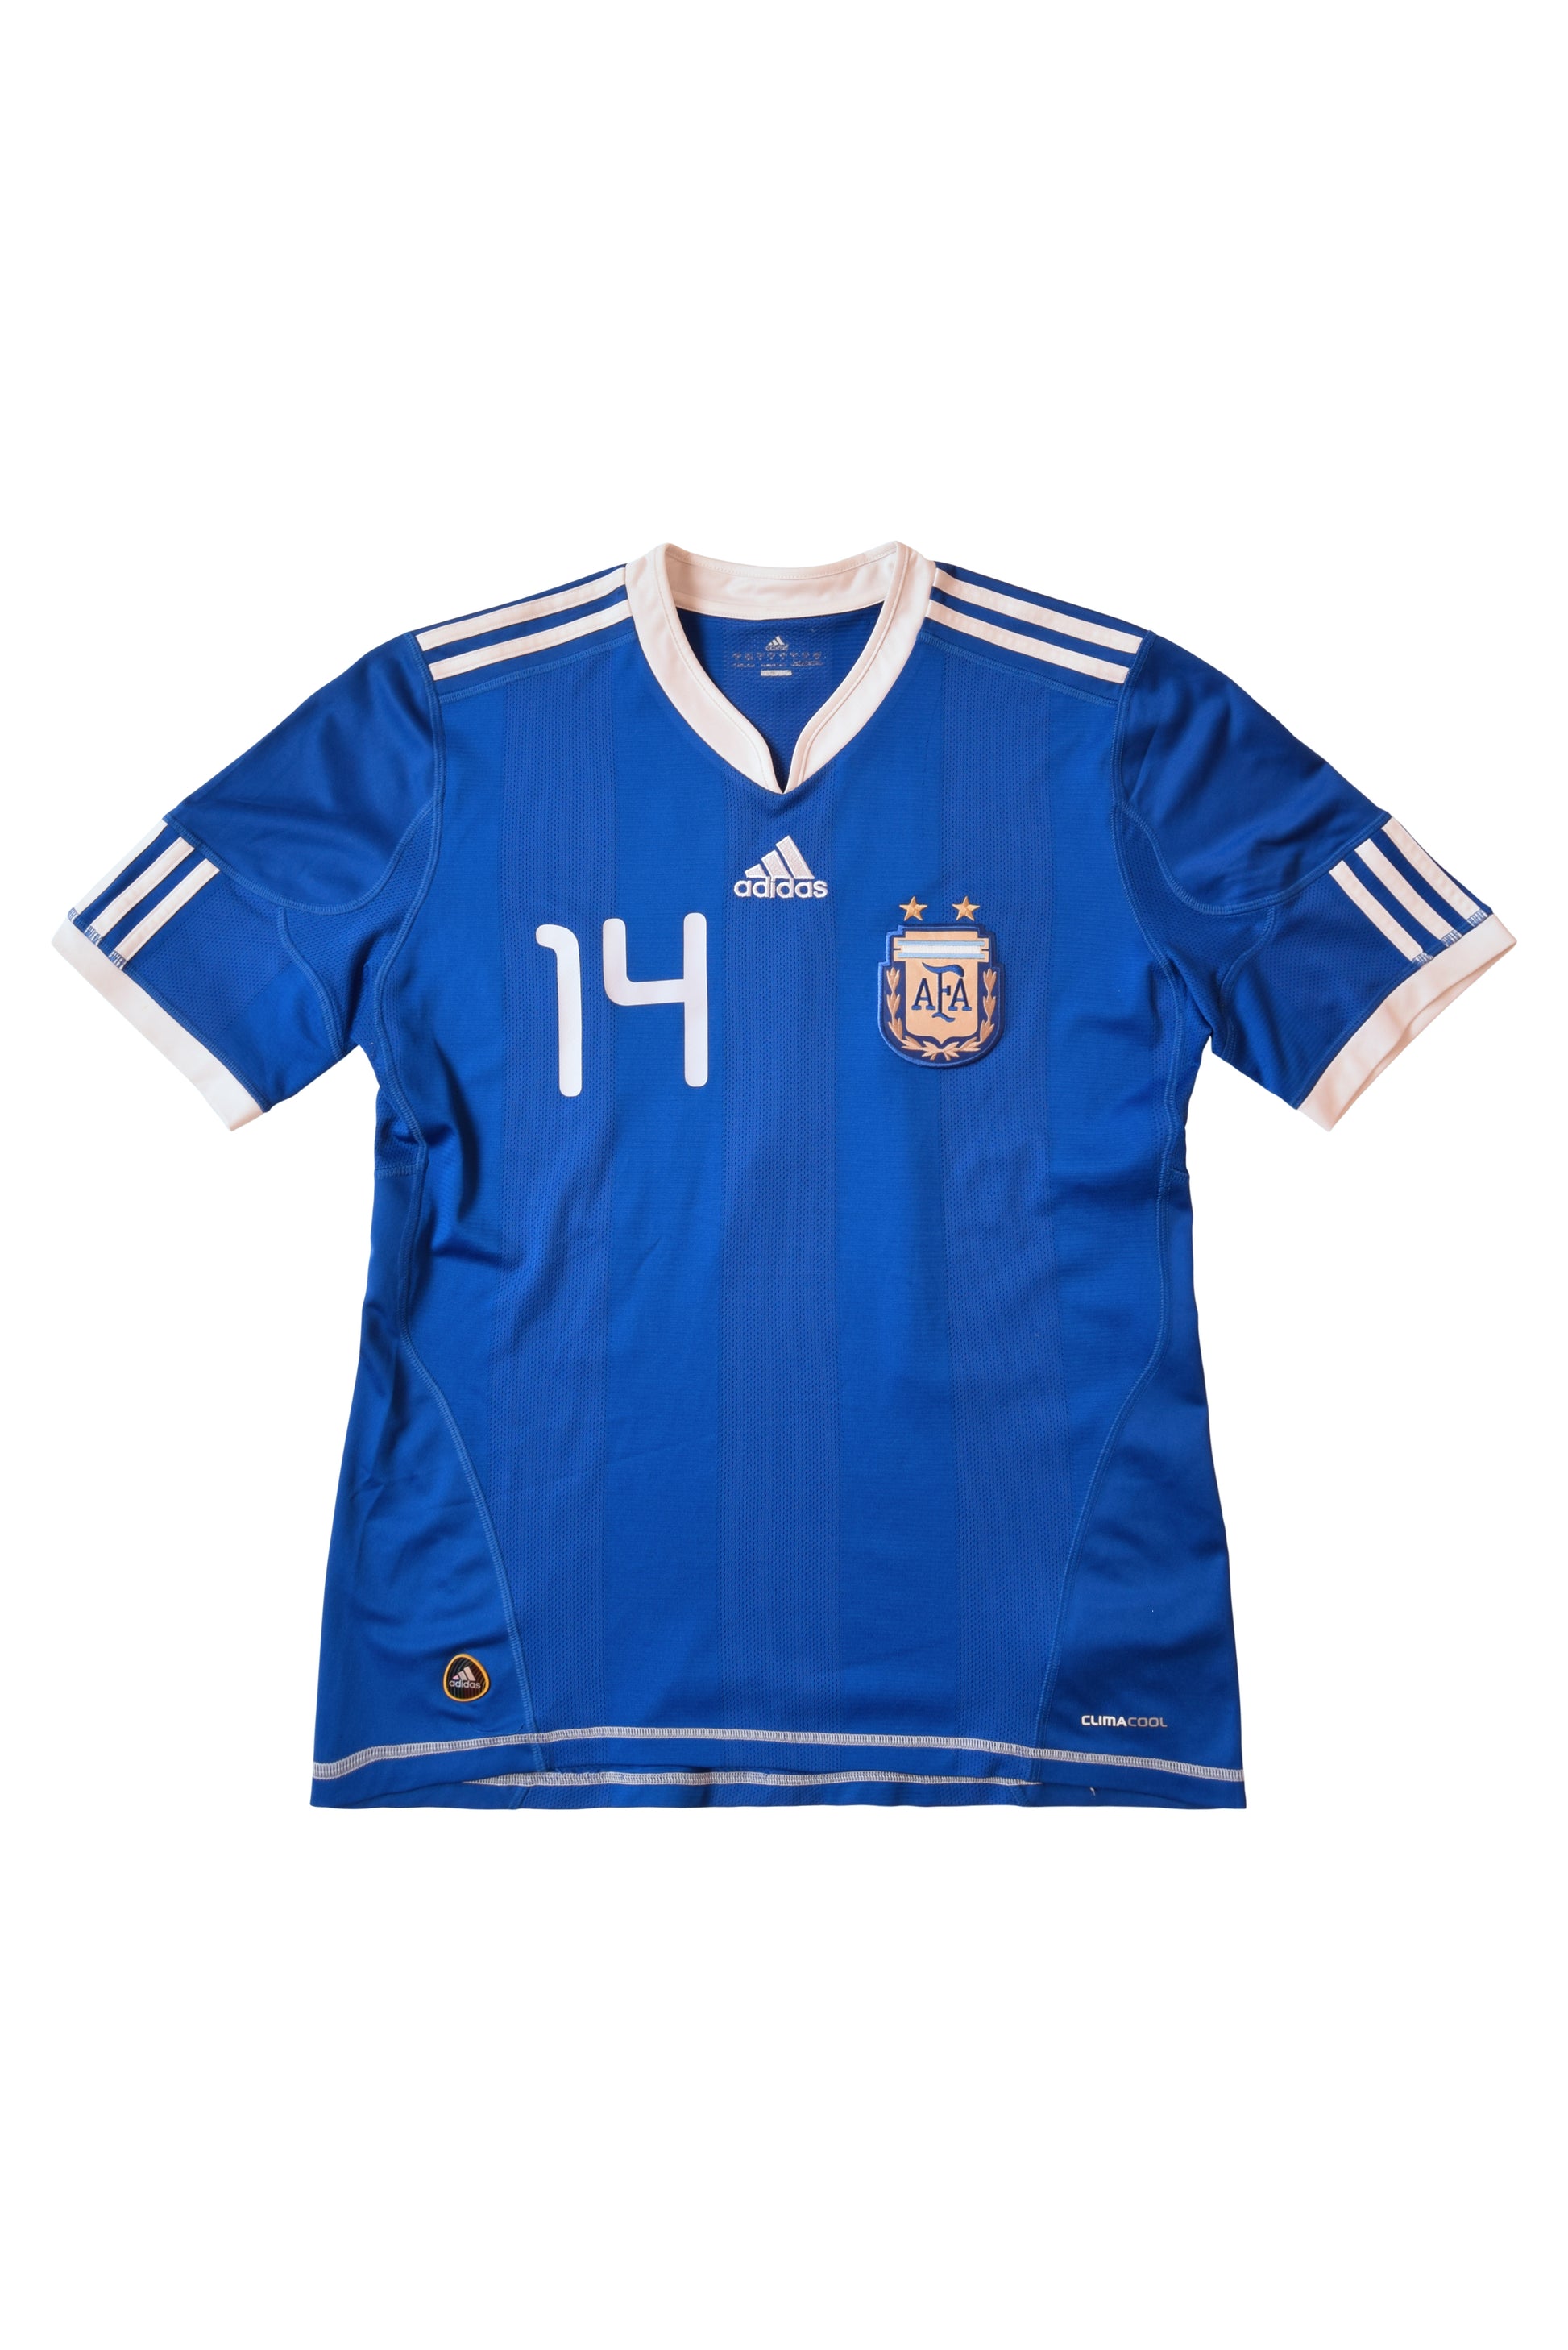 Argentina Adidas Mascherano 14 2010-2011 Away Football Shirt Blue Size S AFA